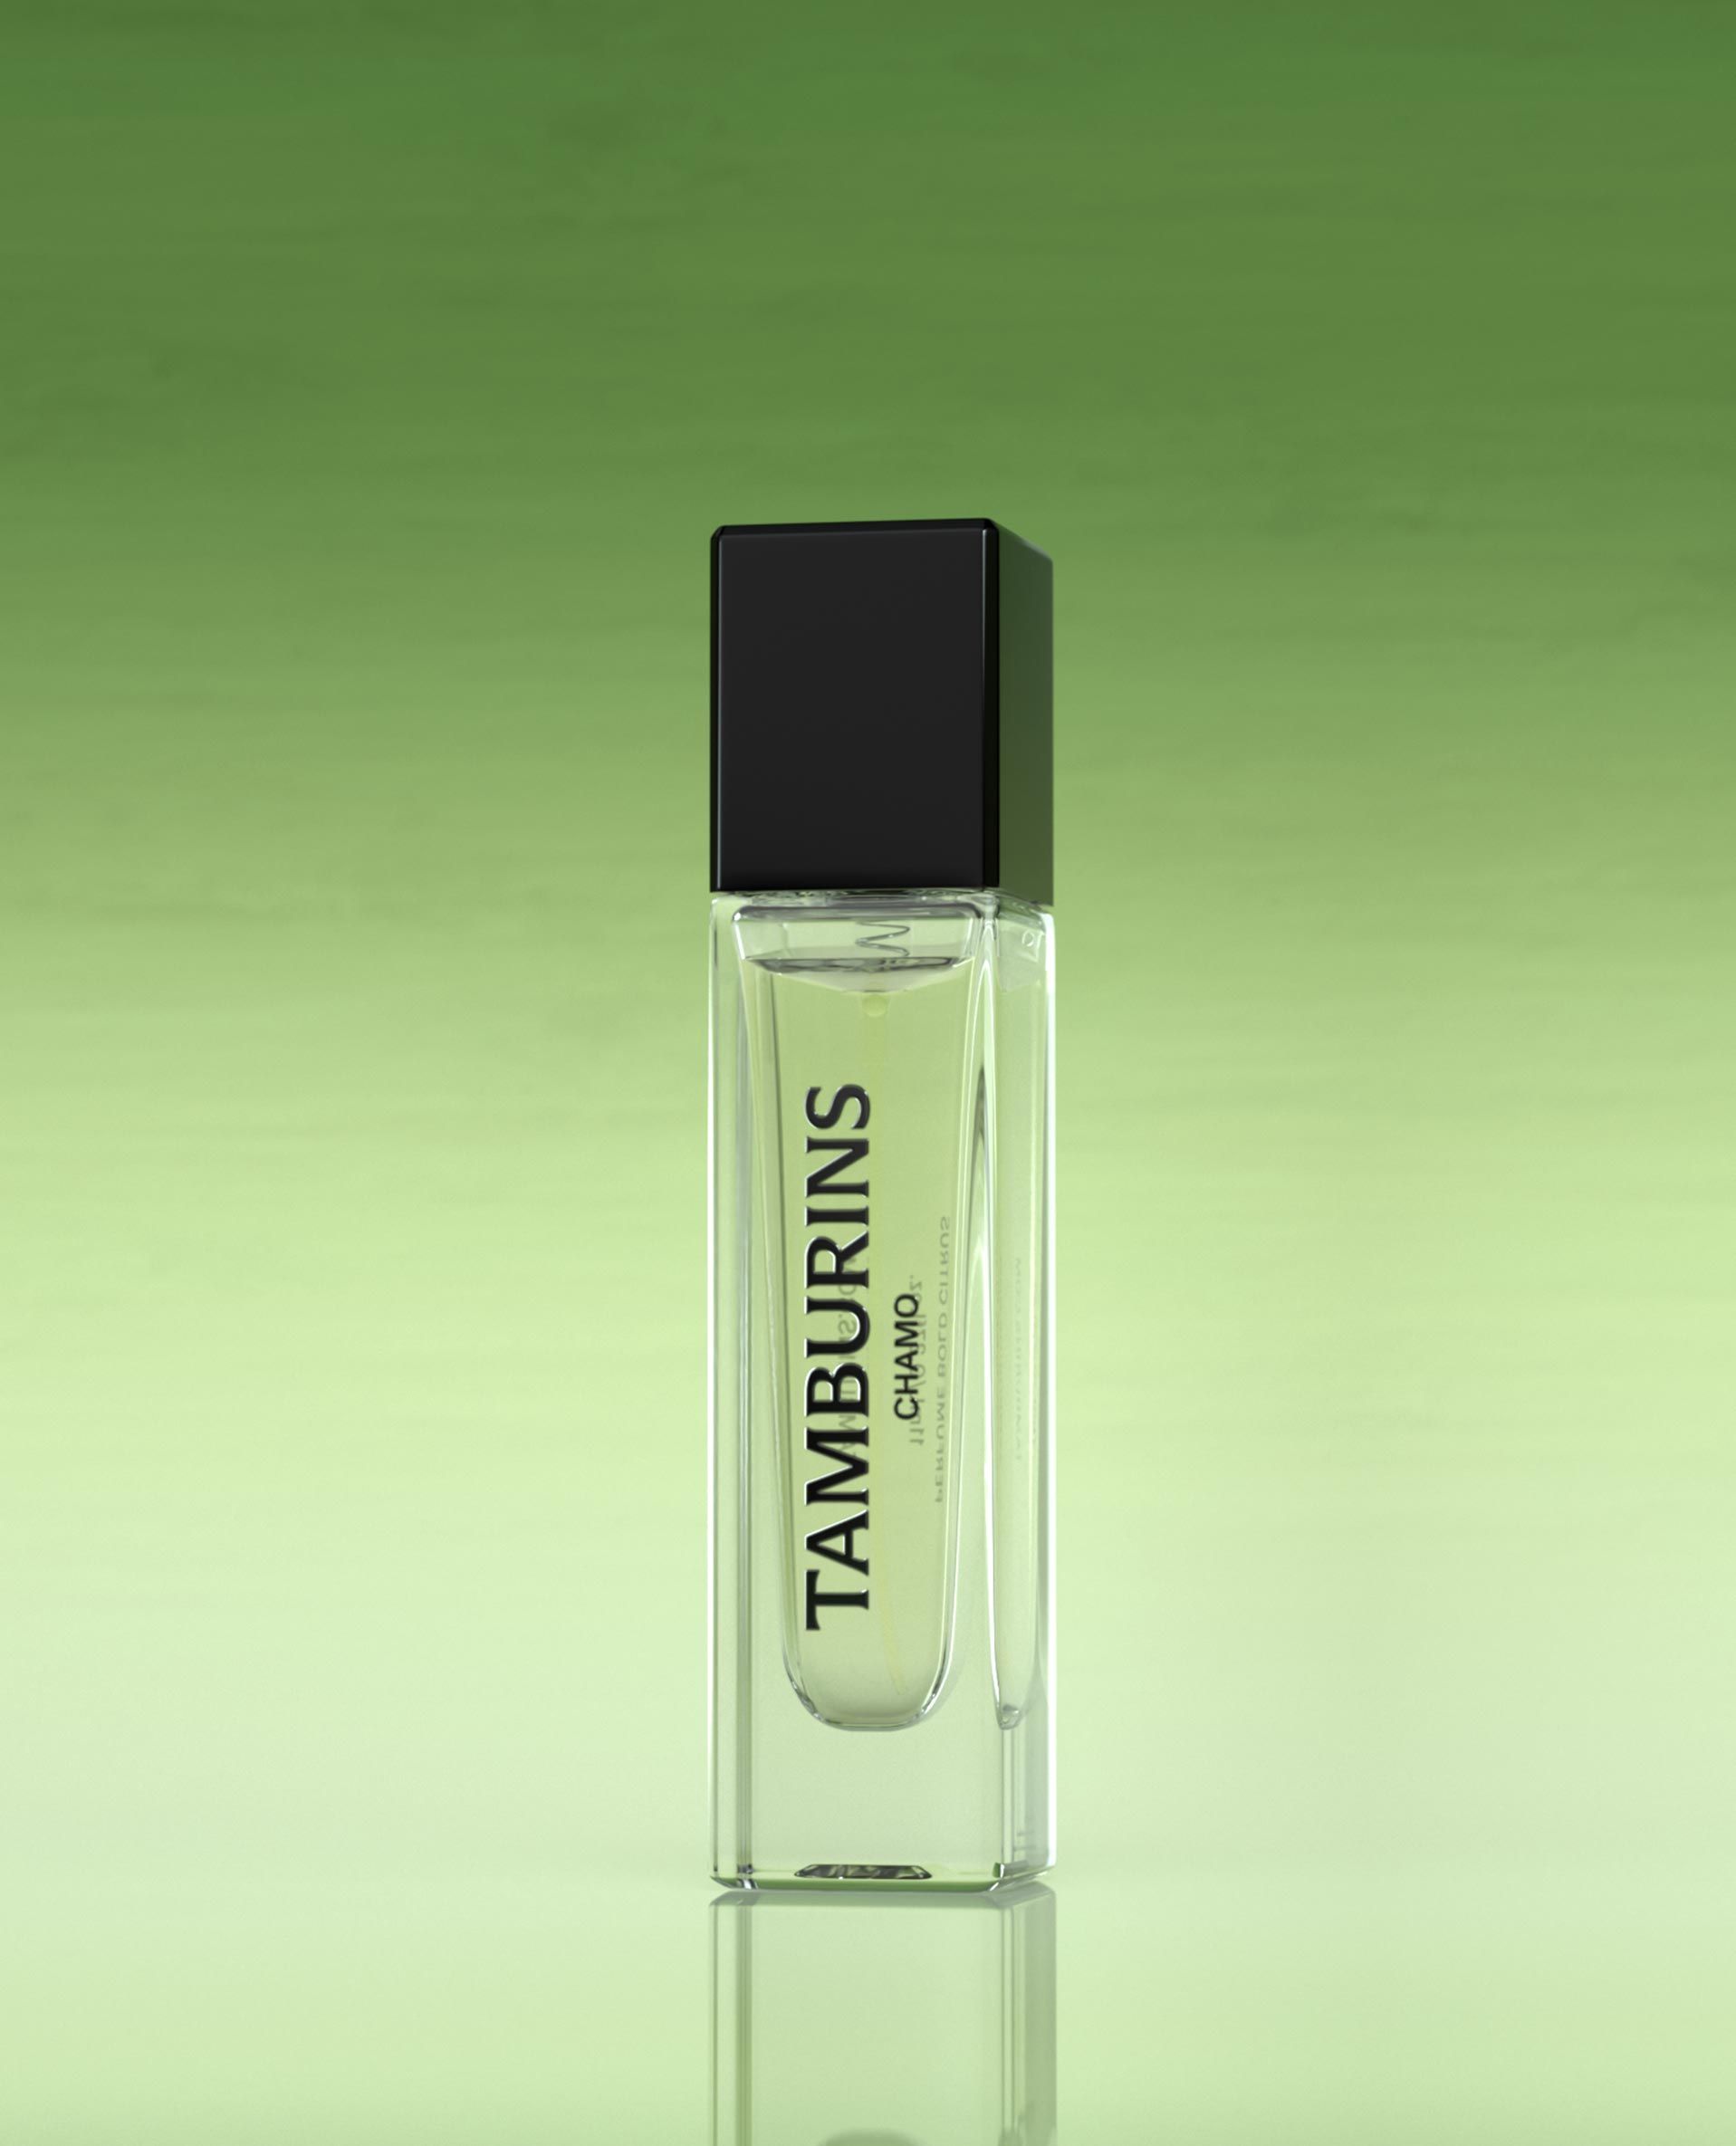 Small TAMBURINS Perfume bottle with #Chamo label.